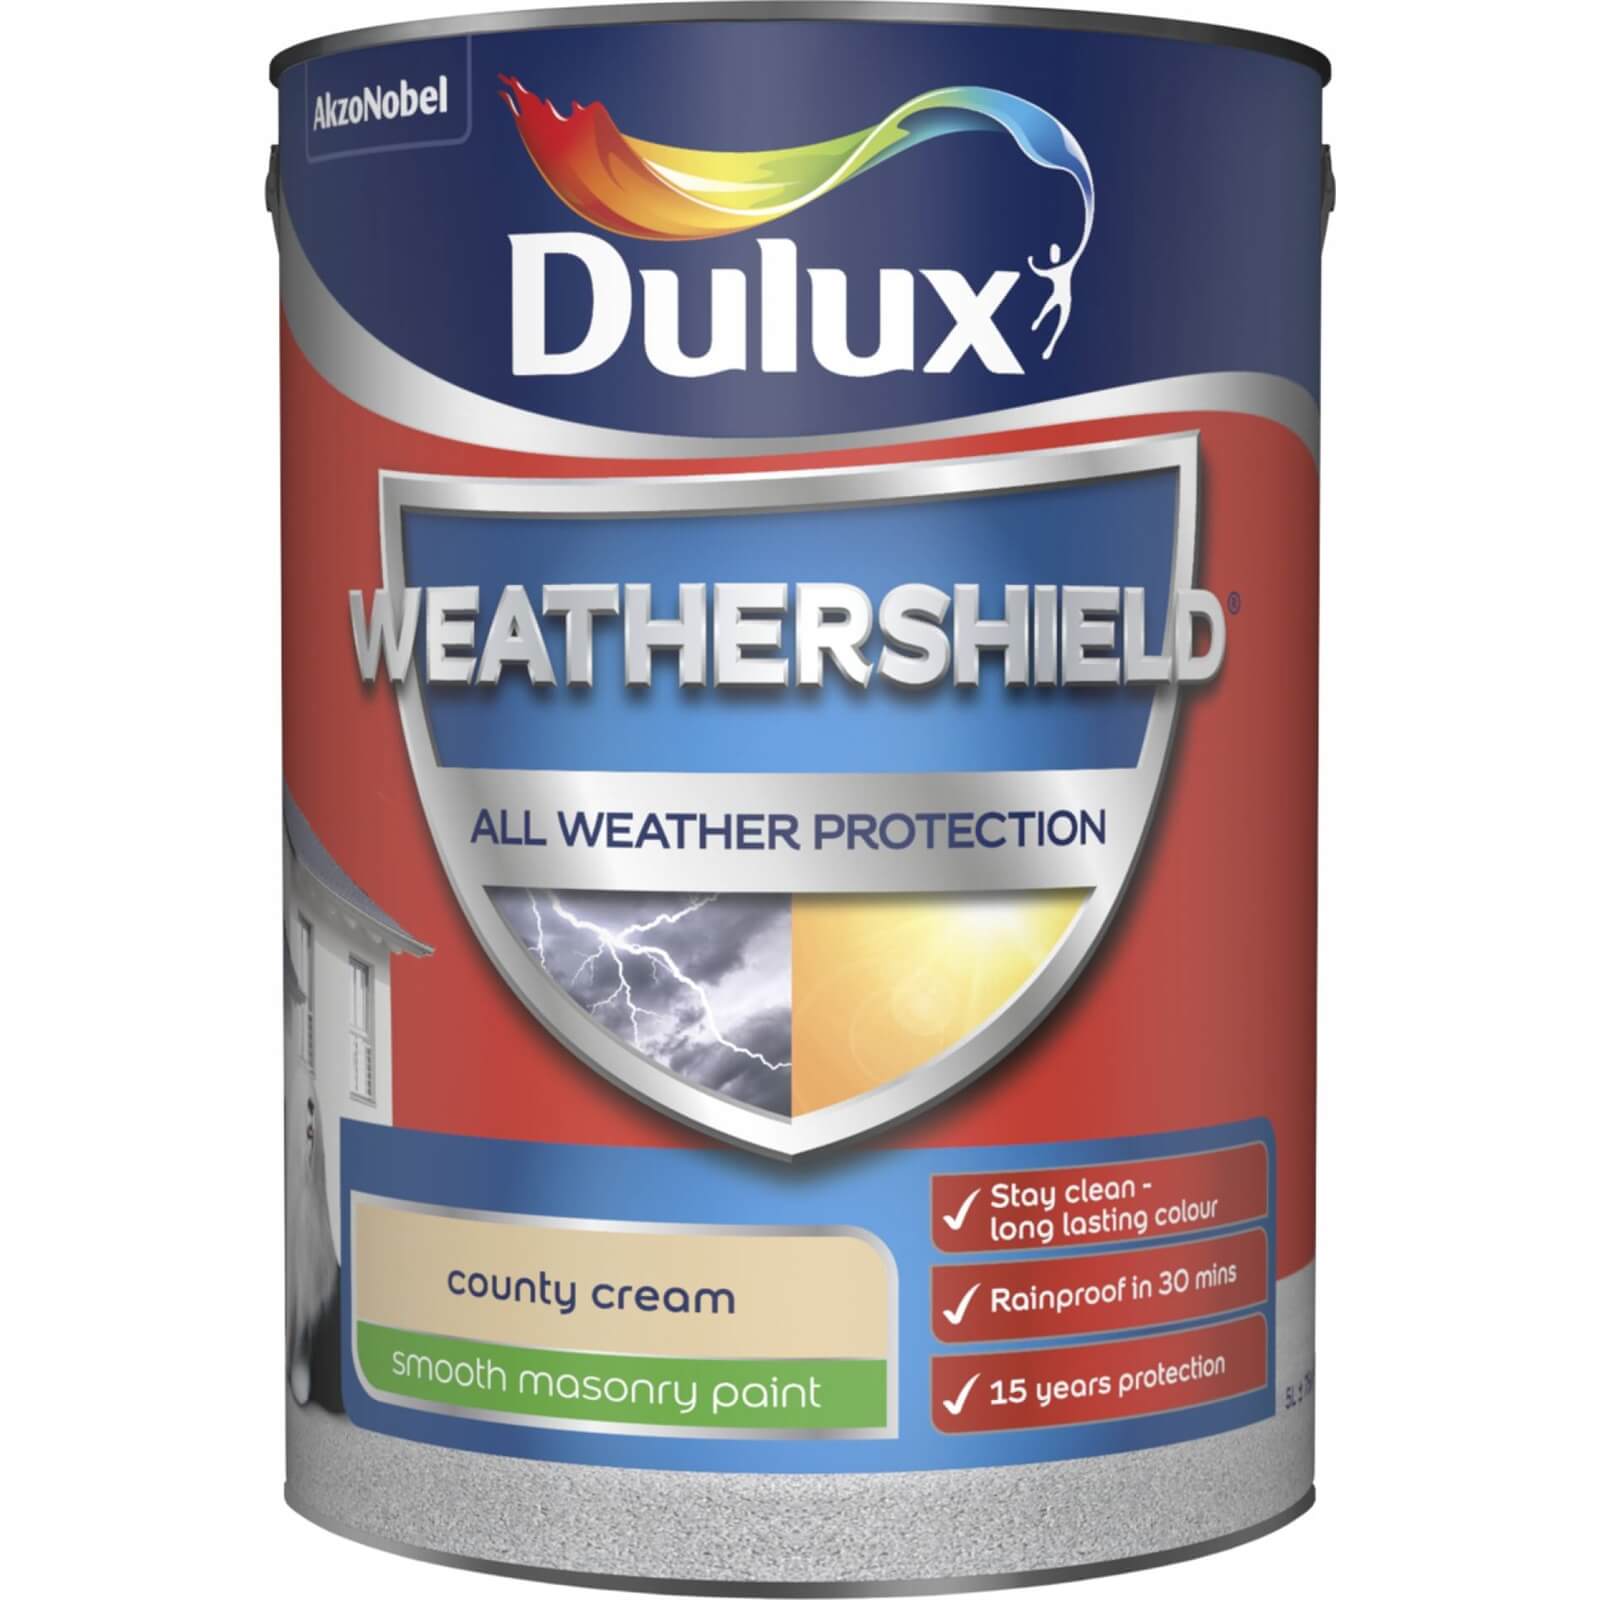 Dulux Weathershield All Weather Smooth Masonry Paint County Cream - 5L